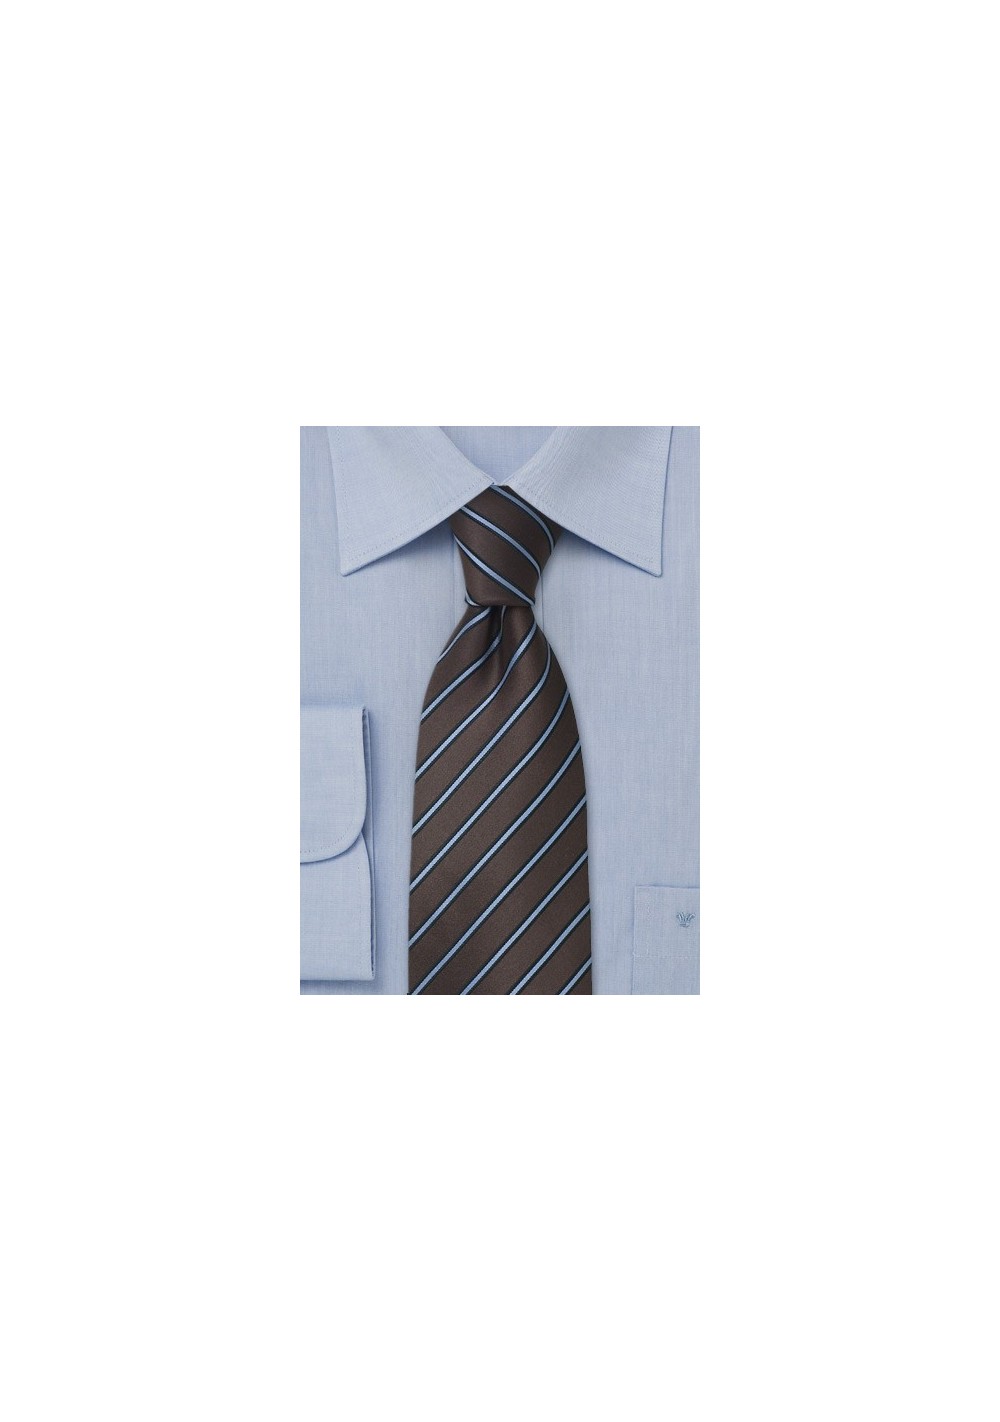 Auburn thin striped silk tie - Handmade tie in auburn/brown color